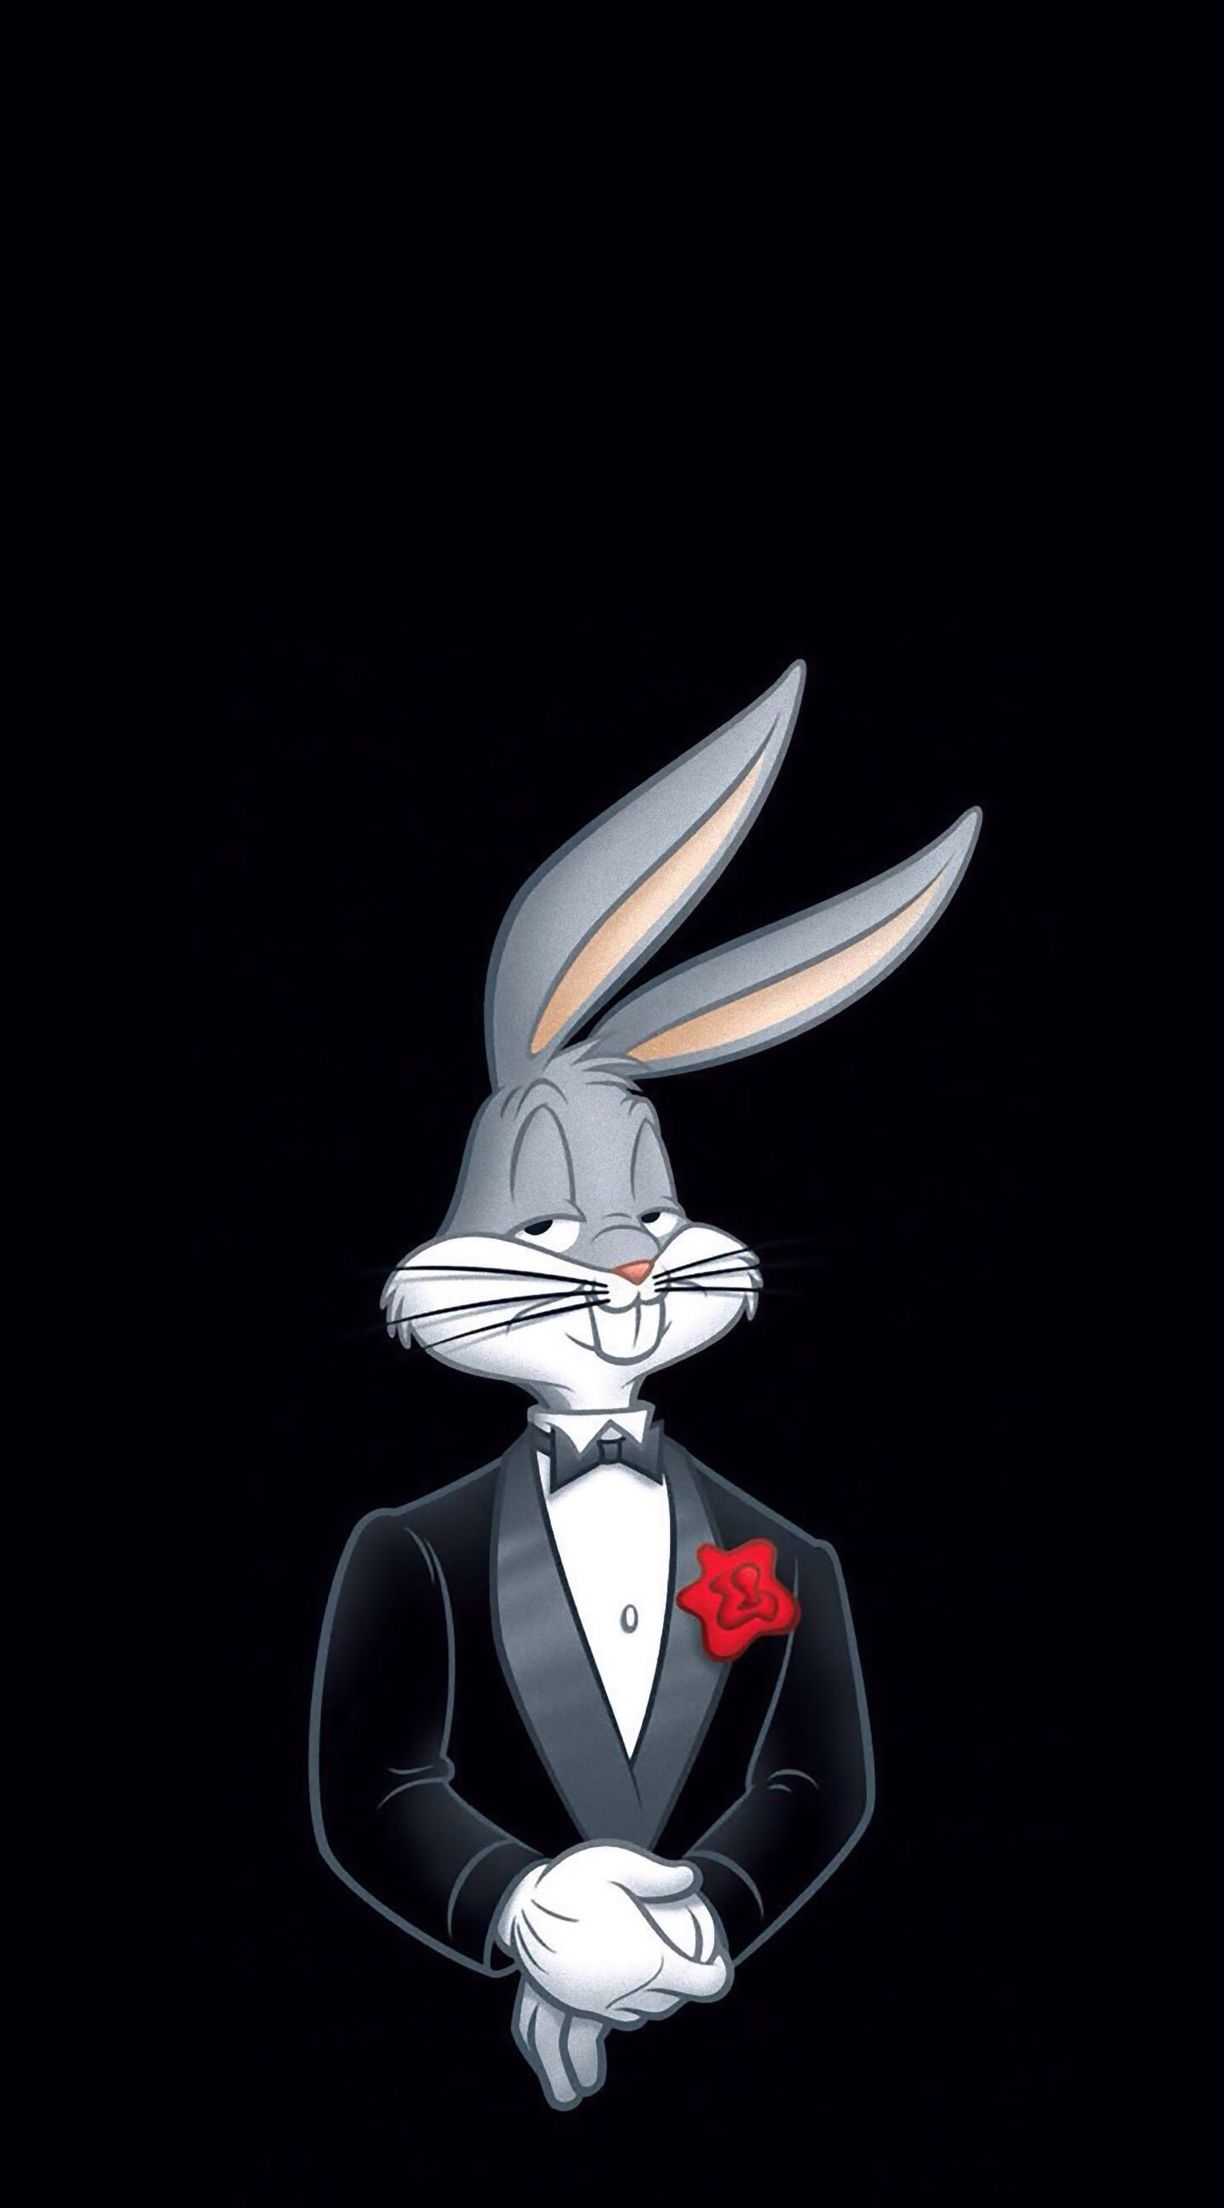 Bugs Bunny wearing a Tuxedo art. Bunny wallpaper, Looney tunes wallpaper, Bugs bunny